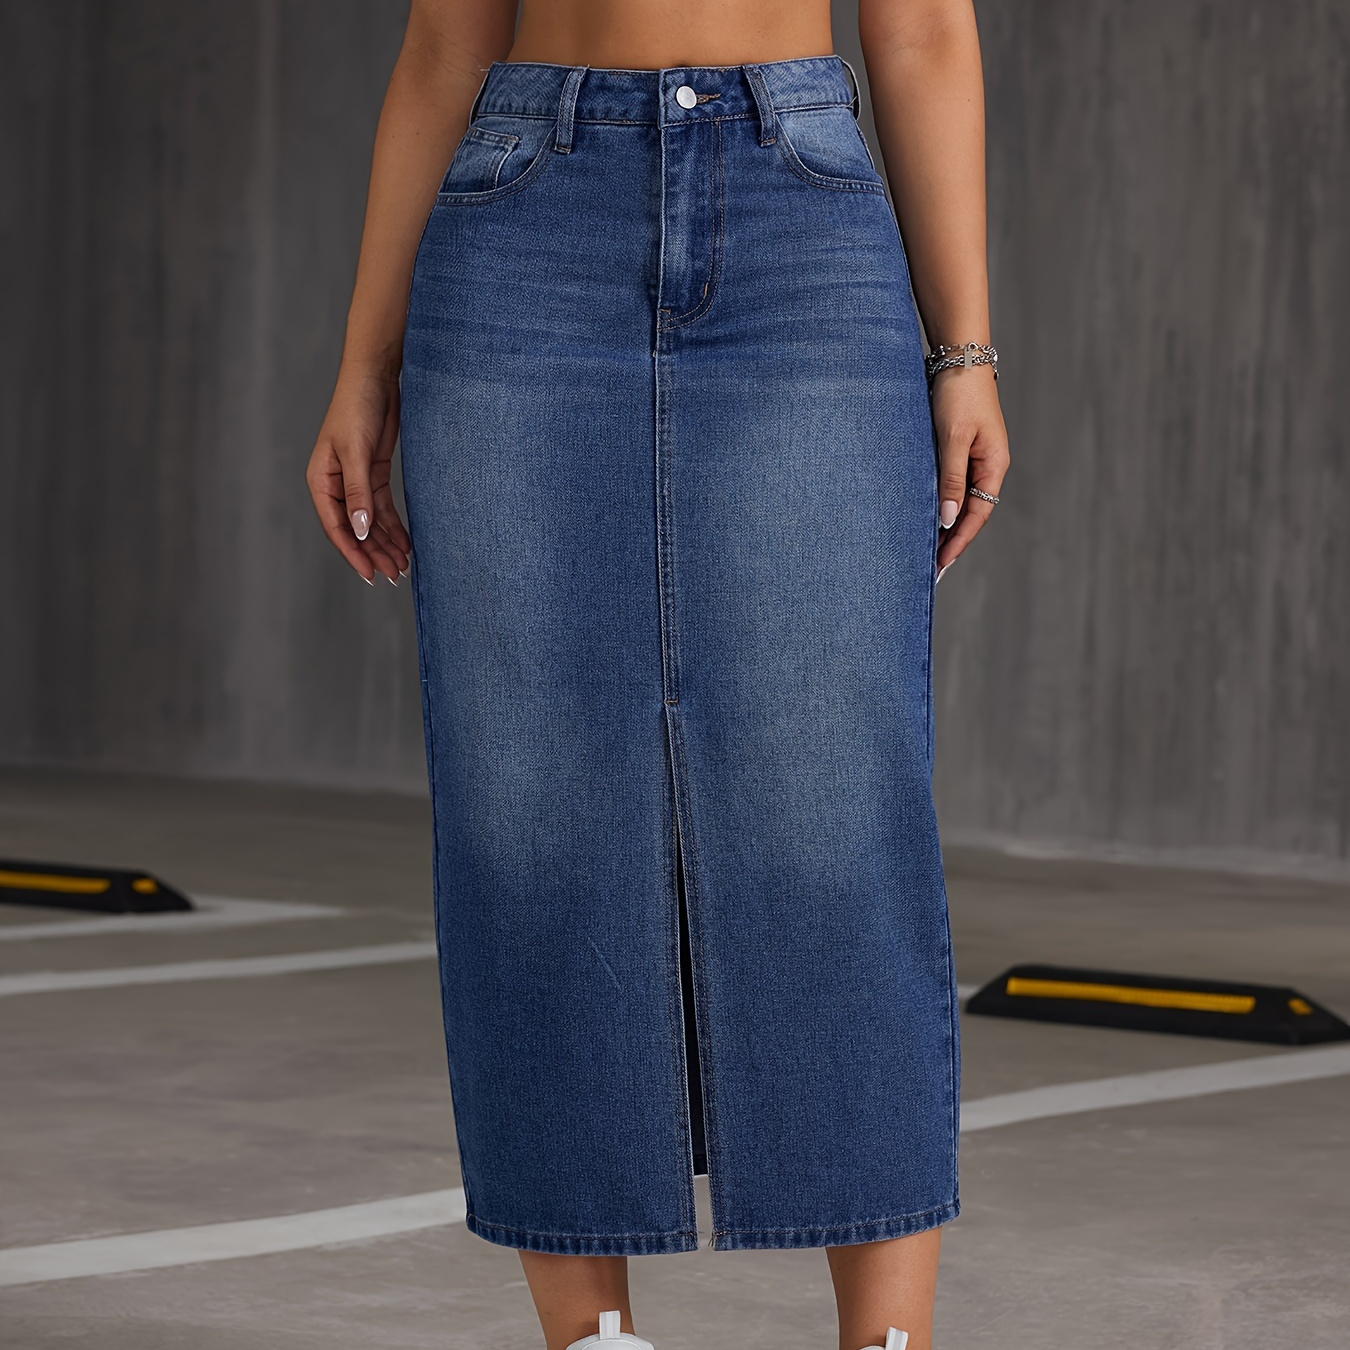 

Women's Street Style Plain Washed Blue Denim Skirt With Slit Hem, Midi Length, Fashionable Casual Jean Skirt